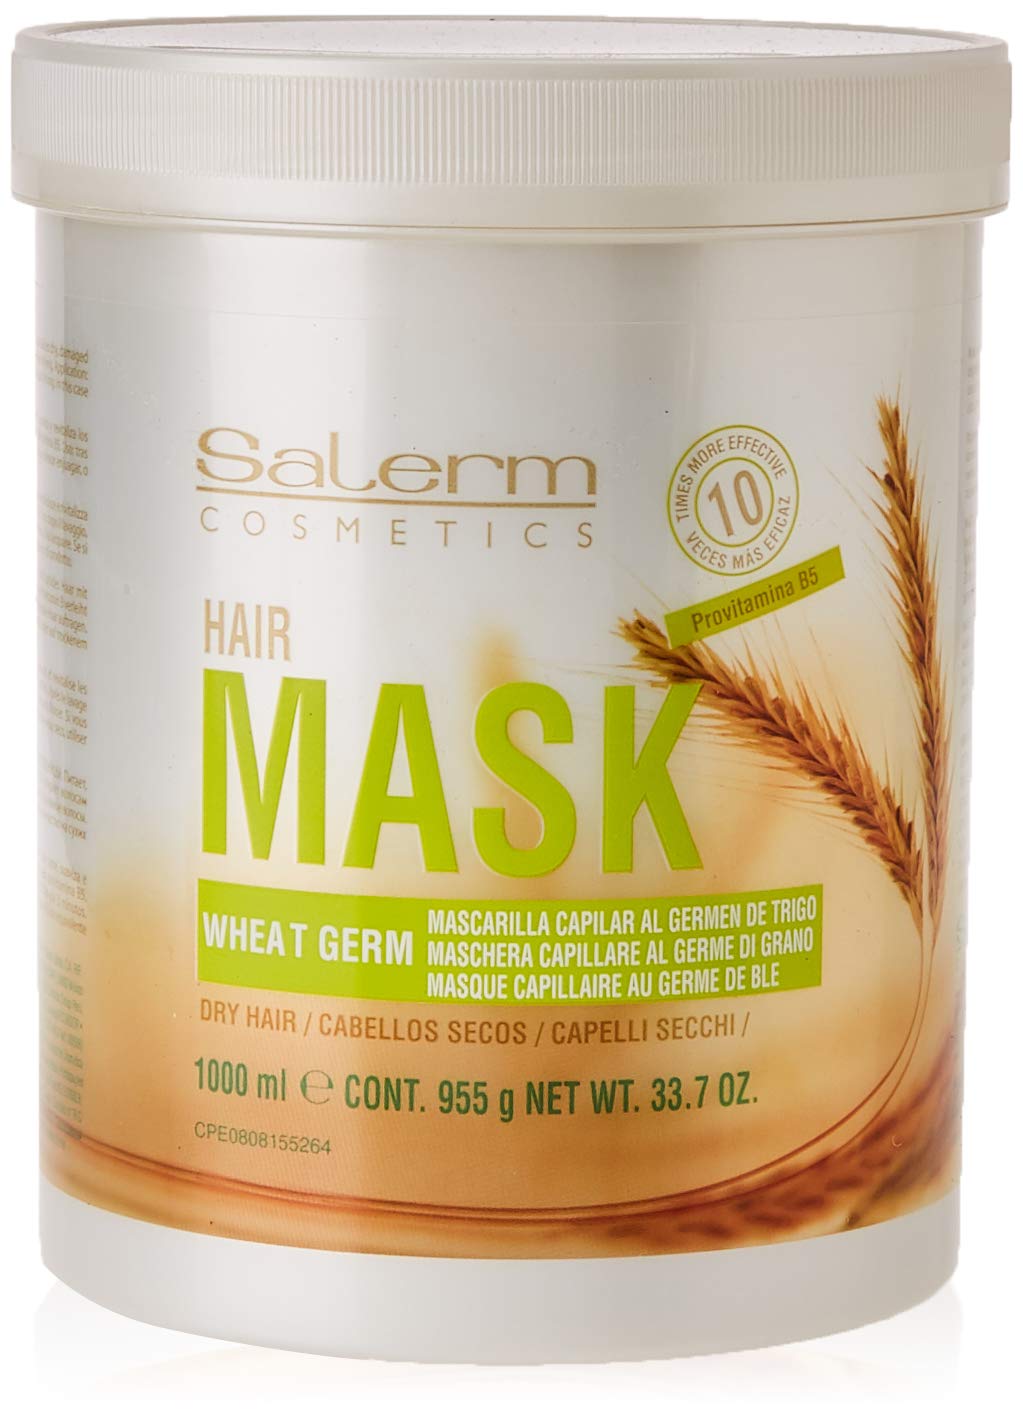 Salerm Cosmetics Salerm MASCARILLA CAPILAR 33.7 oz/liter by Salerm Wheat Germ Conditioning Treatment Mask